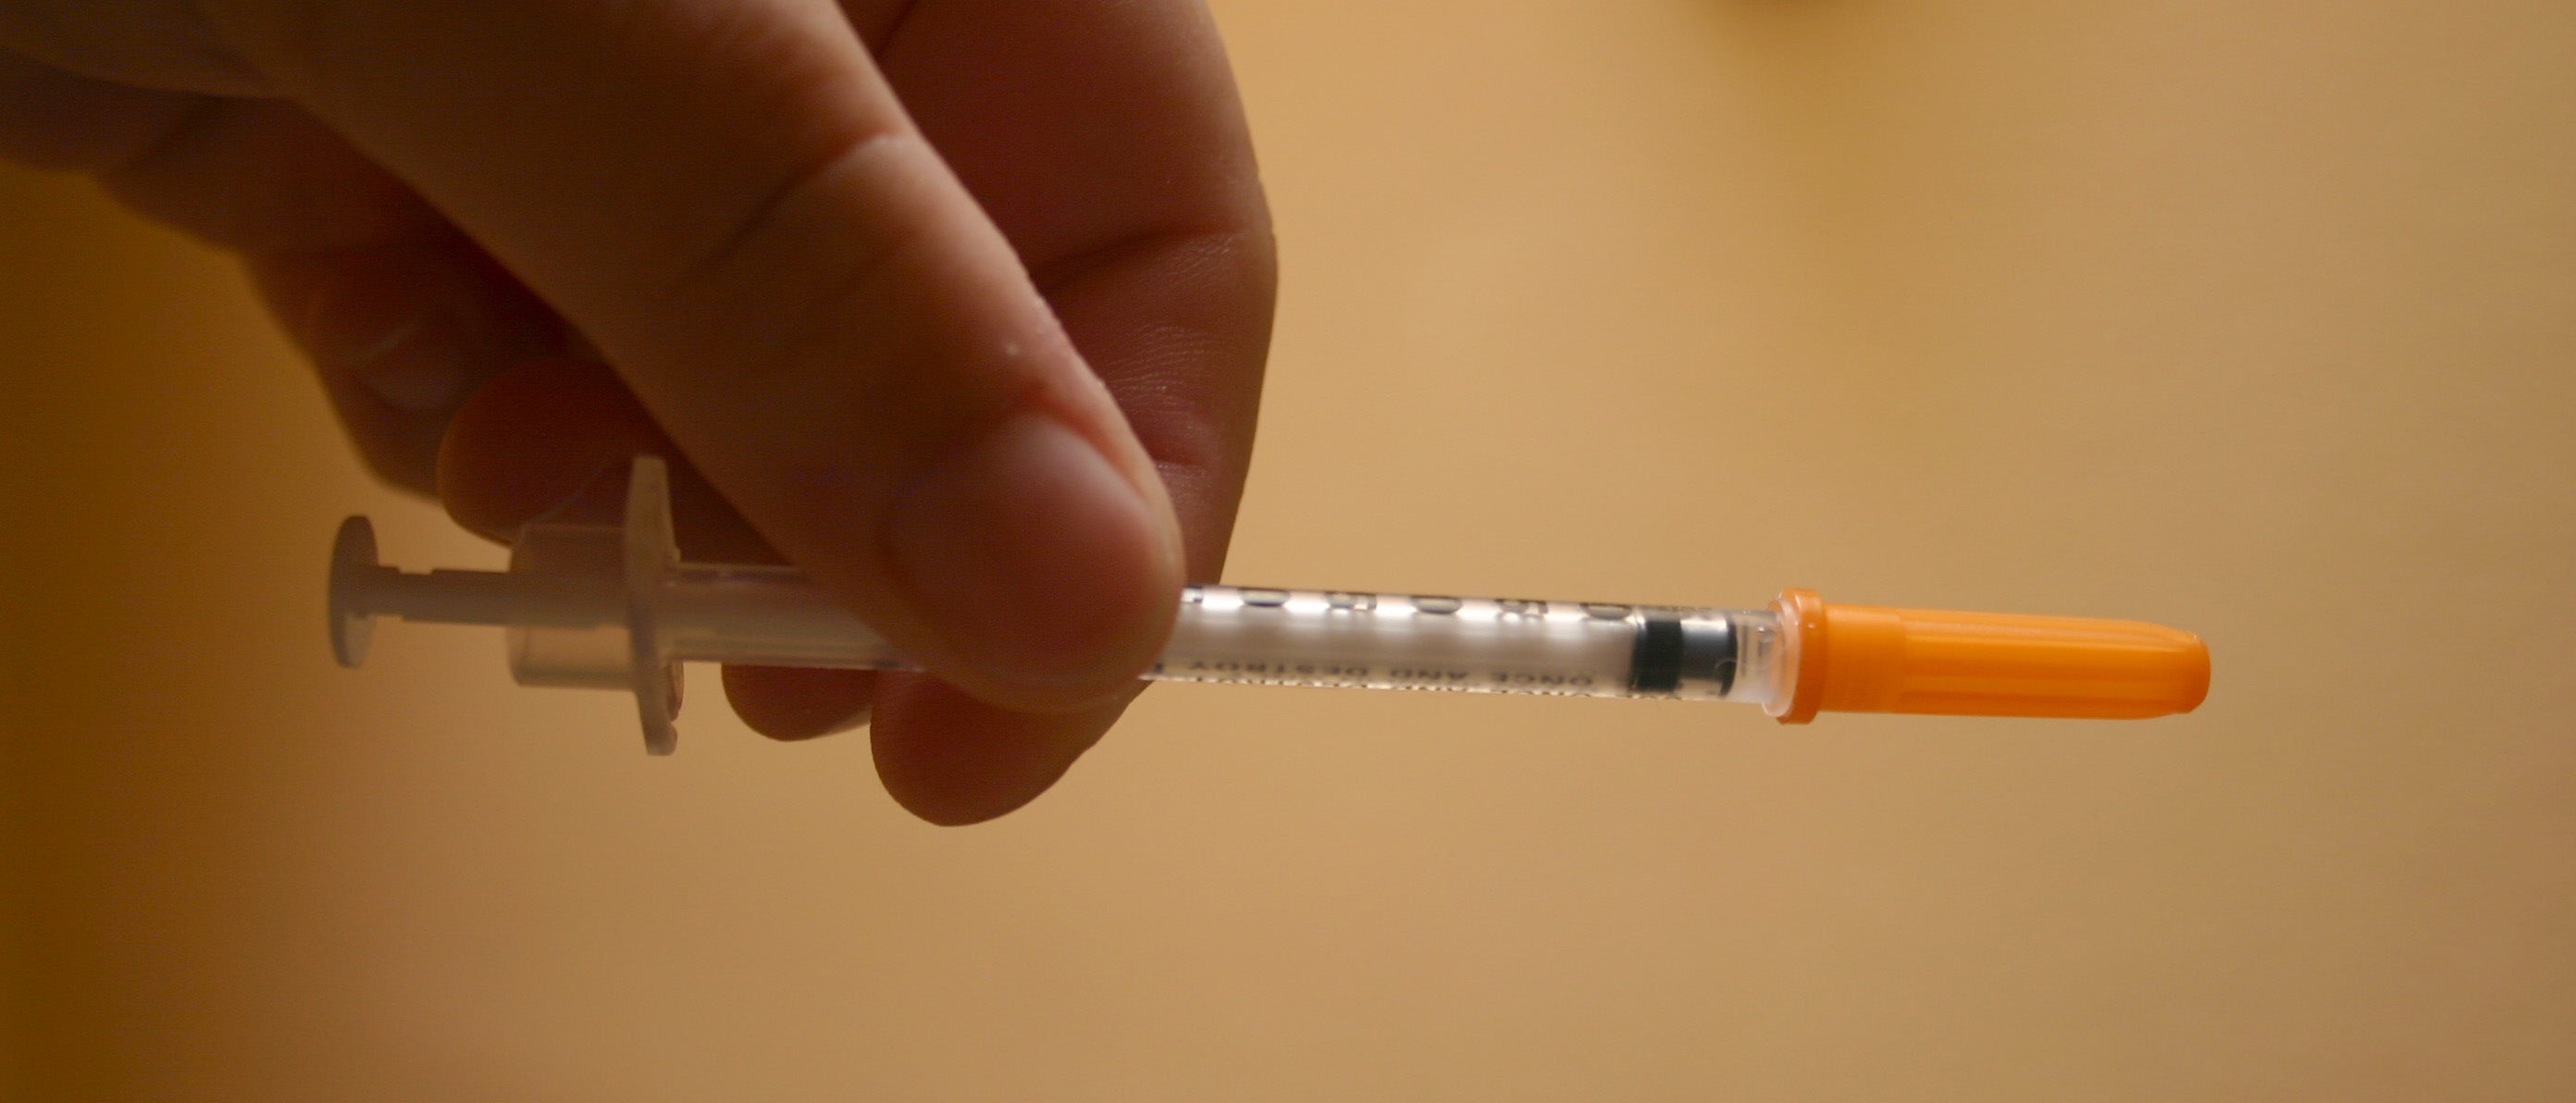 Syringe used by diabetics. (Photo: Melissa Wiese via Wikipedia.org)  